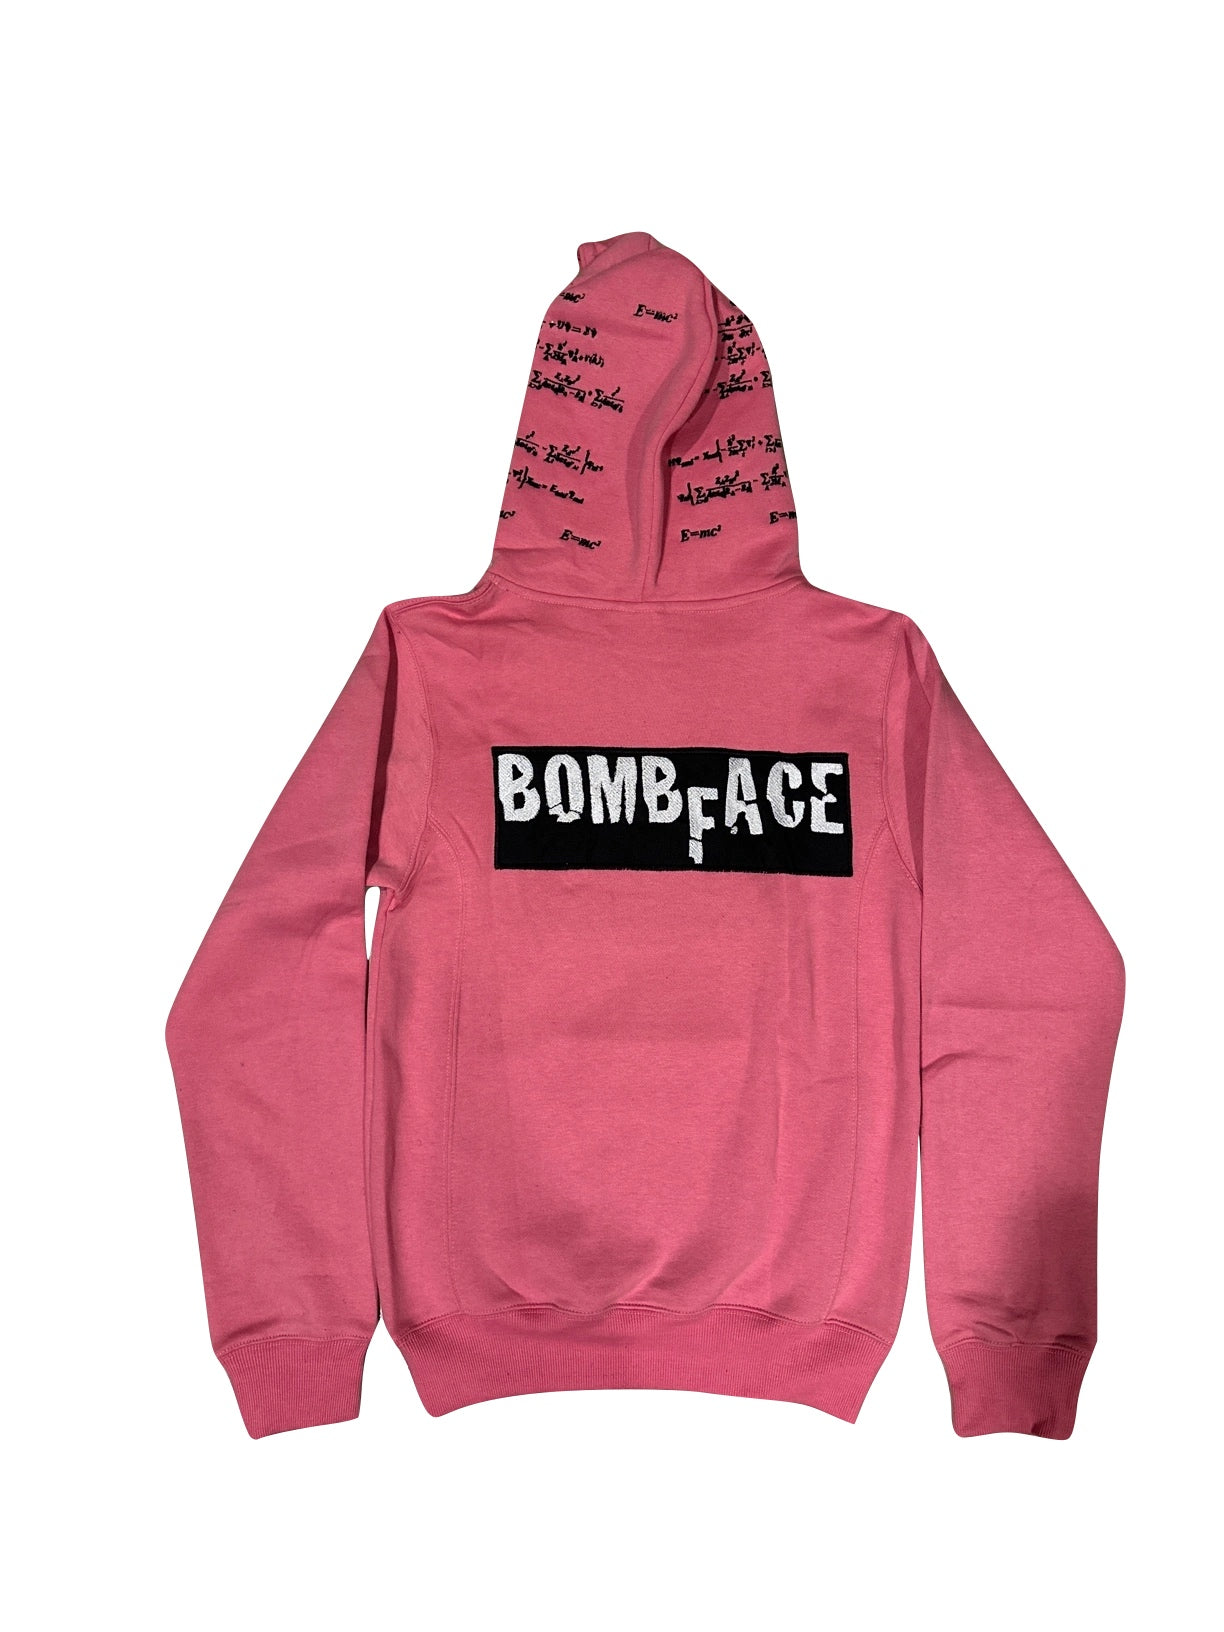 The Formula custom hoodie